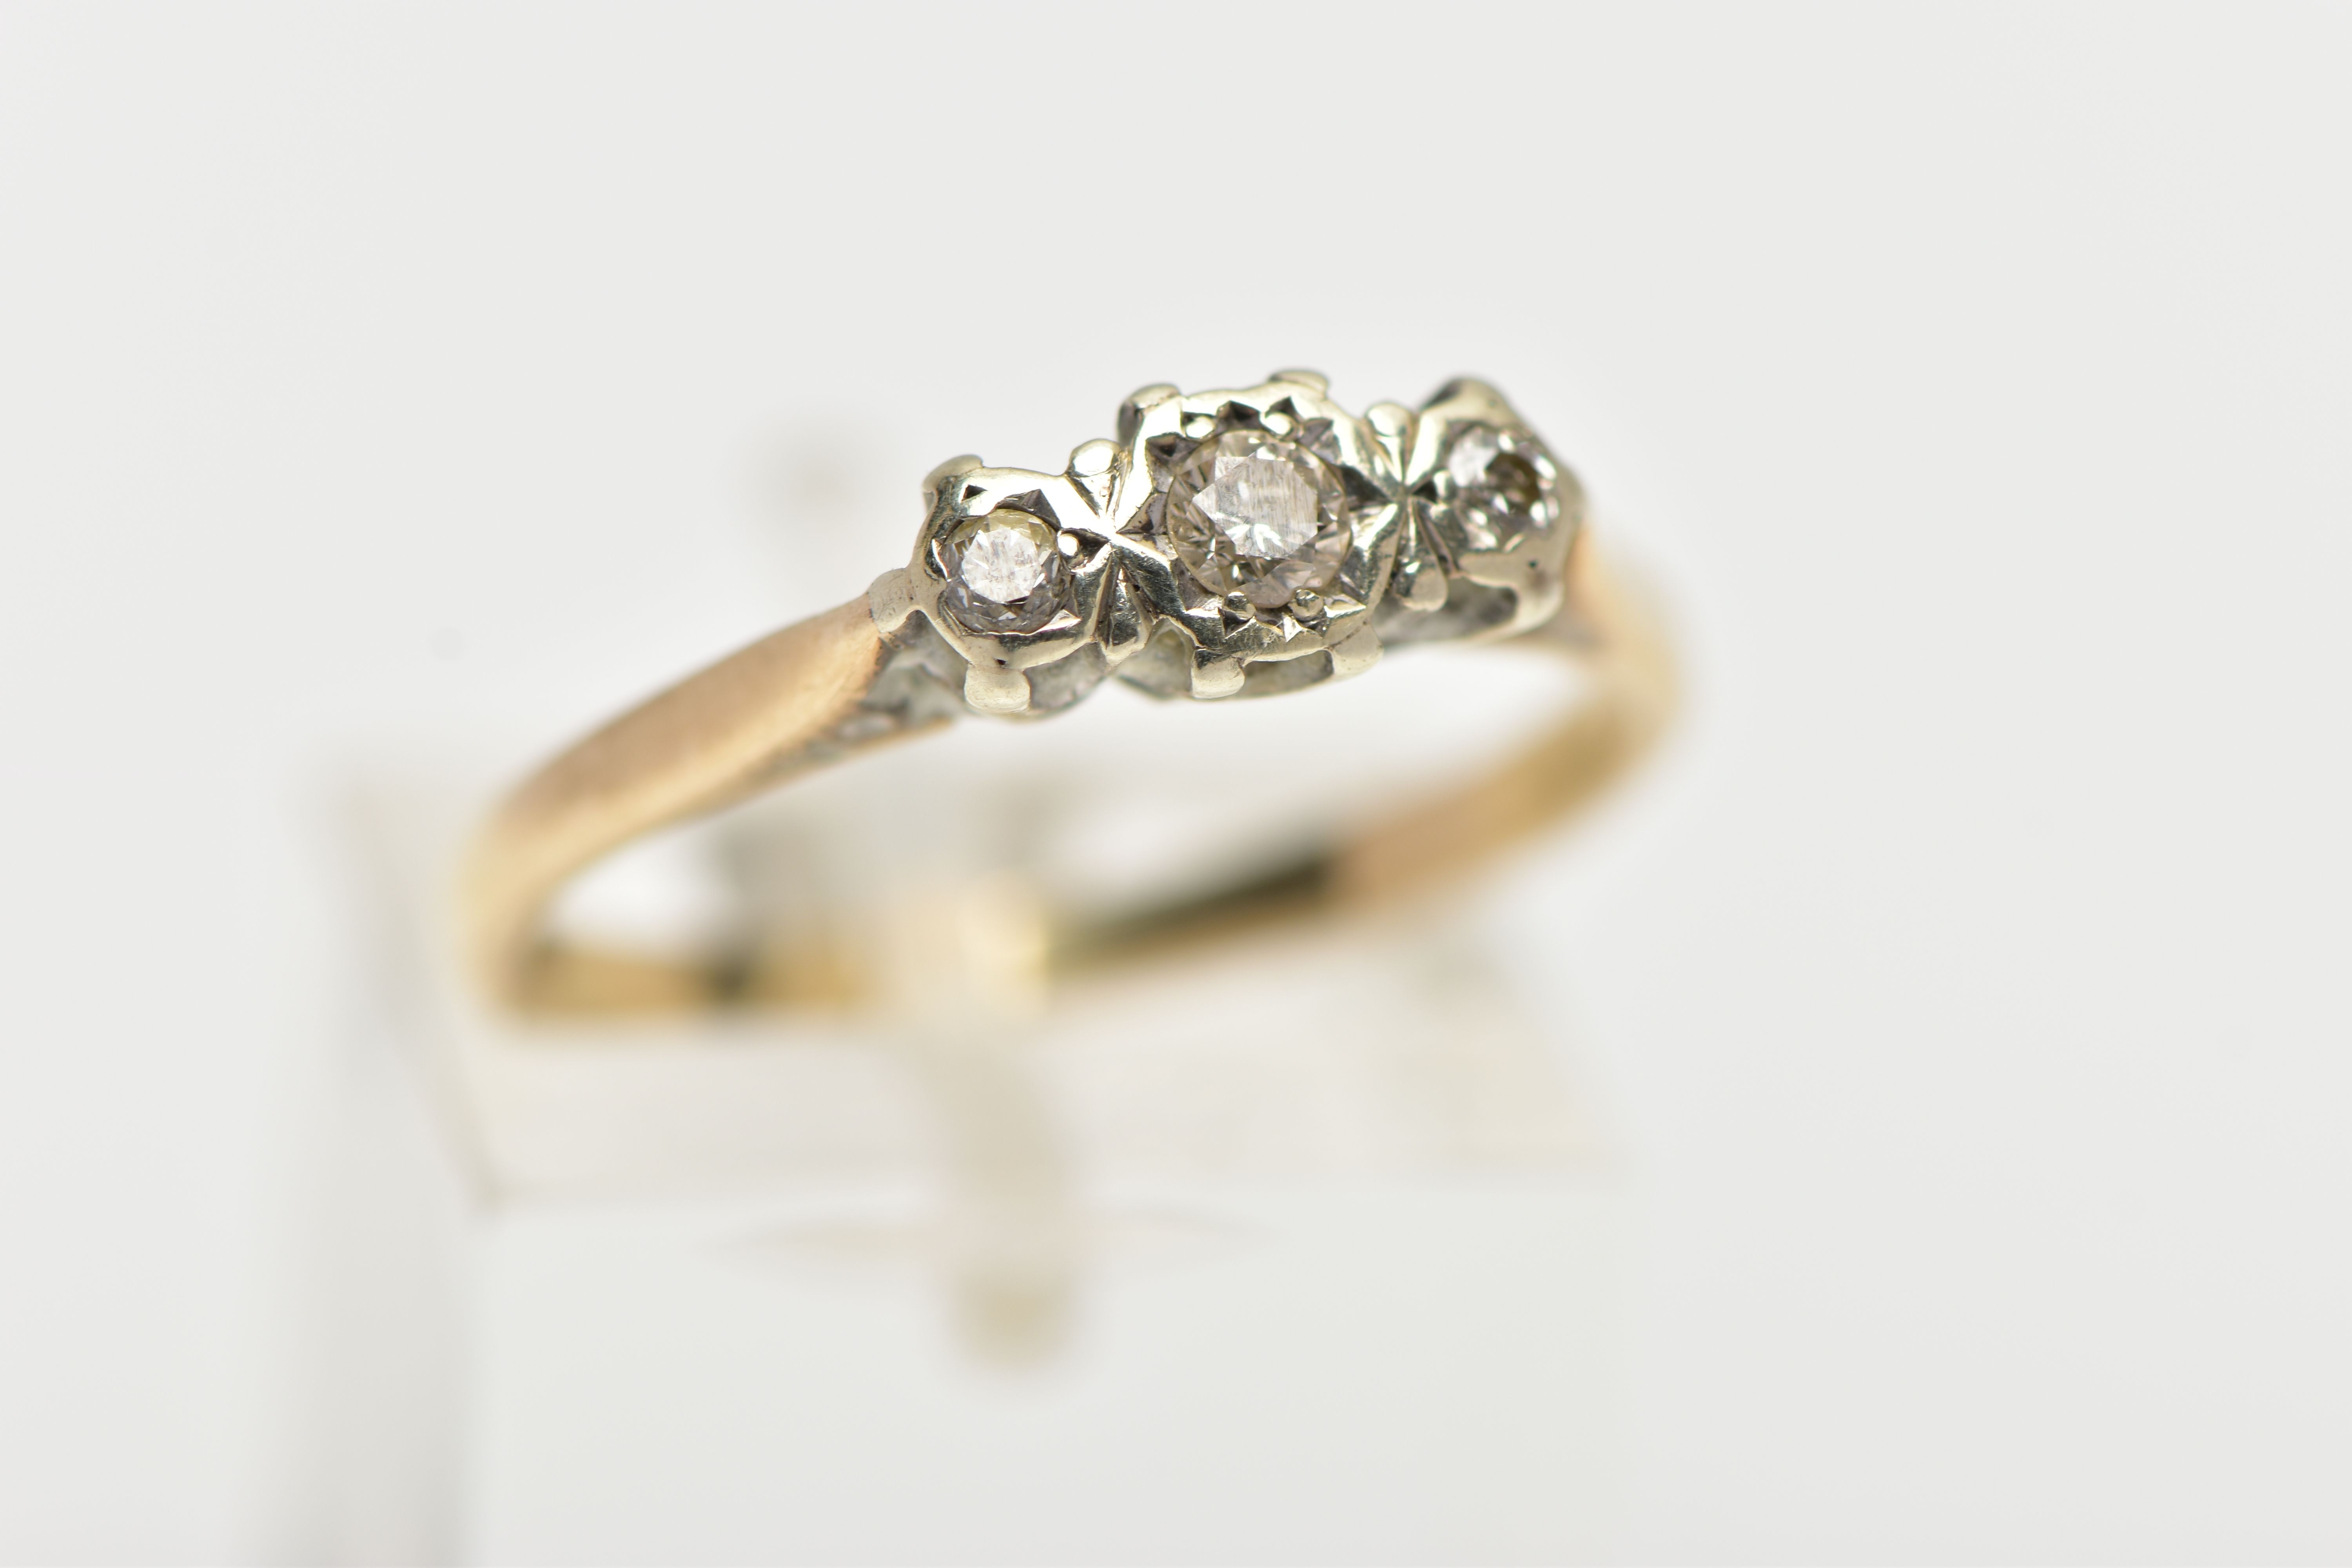 A 9CT GOLD THREE STONE DIAMOND RING, three round brilliant cut diamonds prong set in white metal - Image 4 of 4